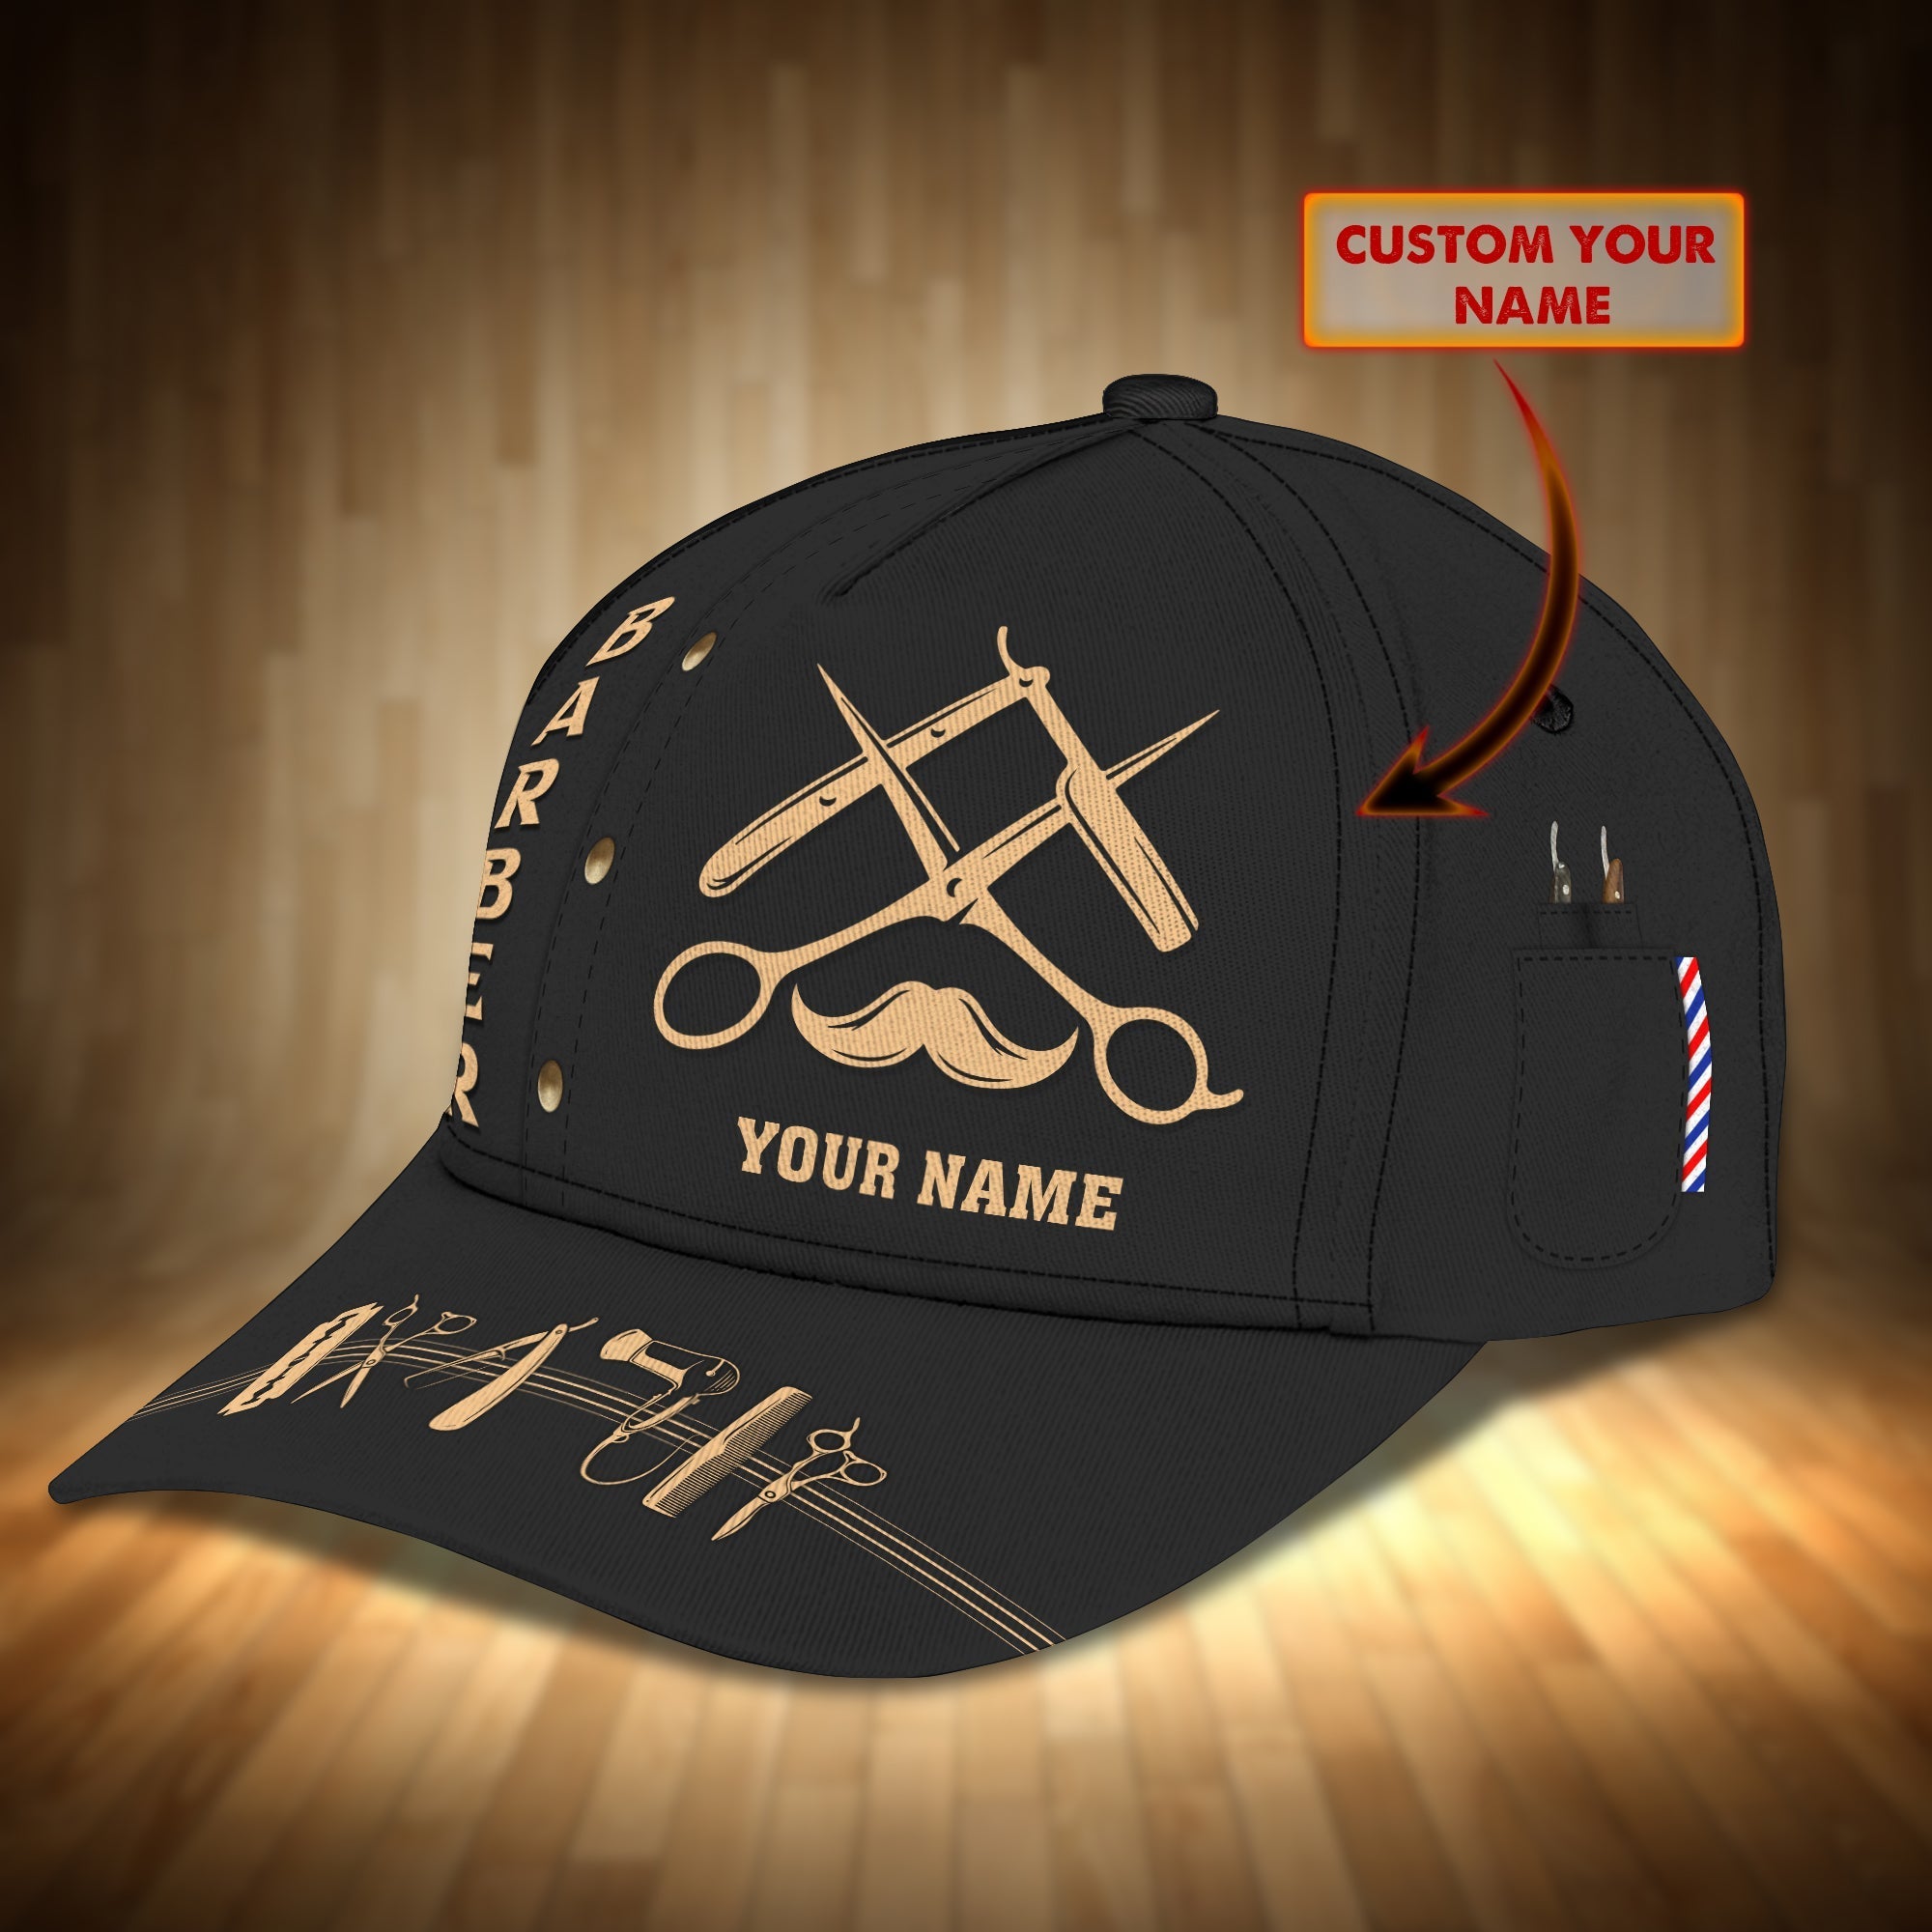 Customized 3D All Over Printed Baseball Cap Hat For Barber Men And Women/ Barber Cap/ Barber Hat/ Gift For Barber